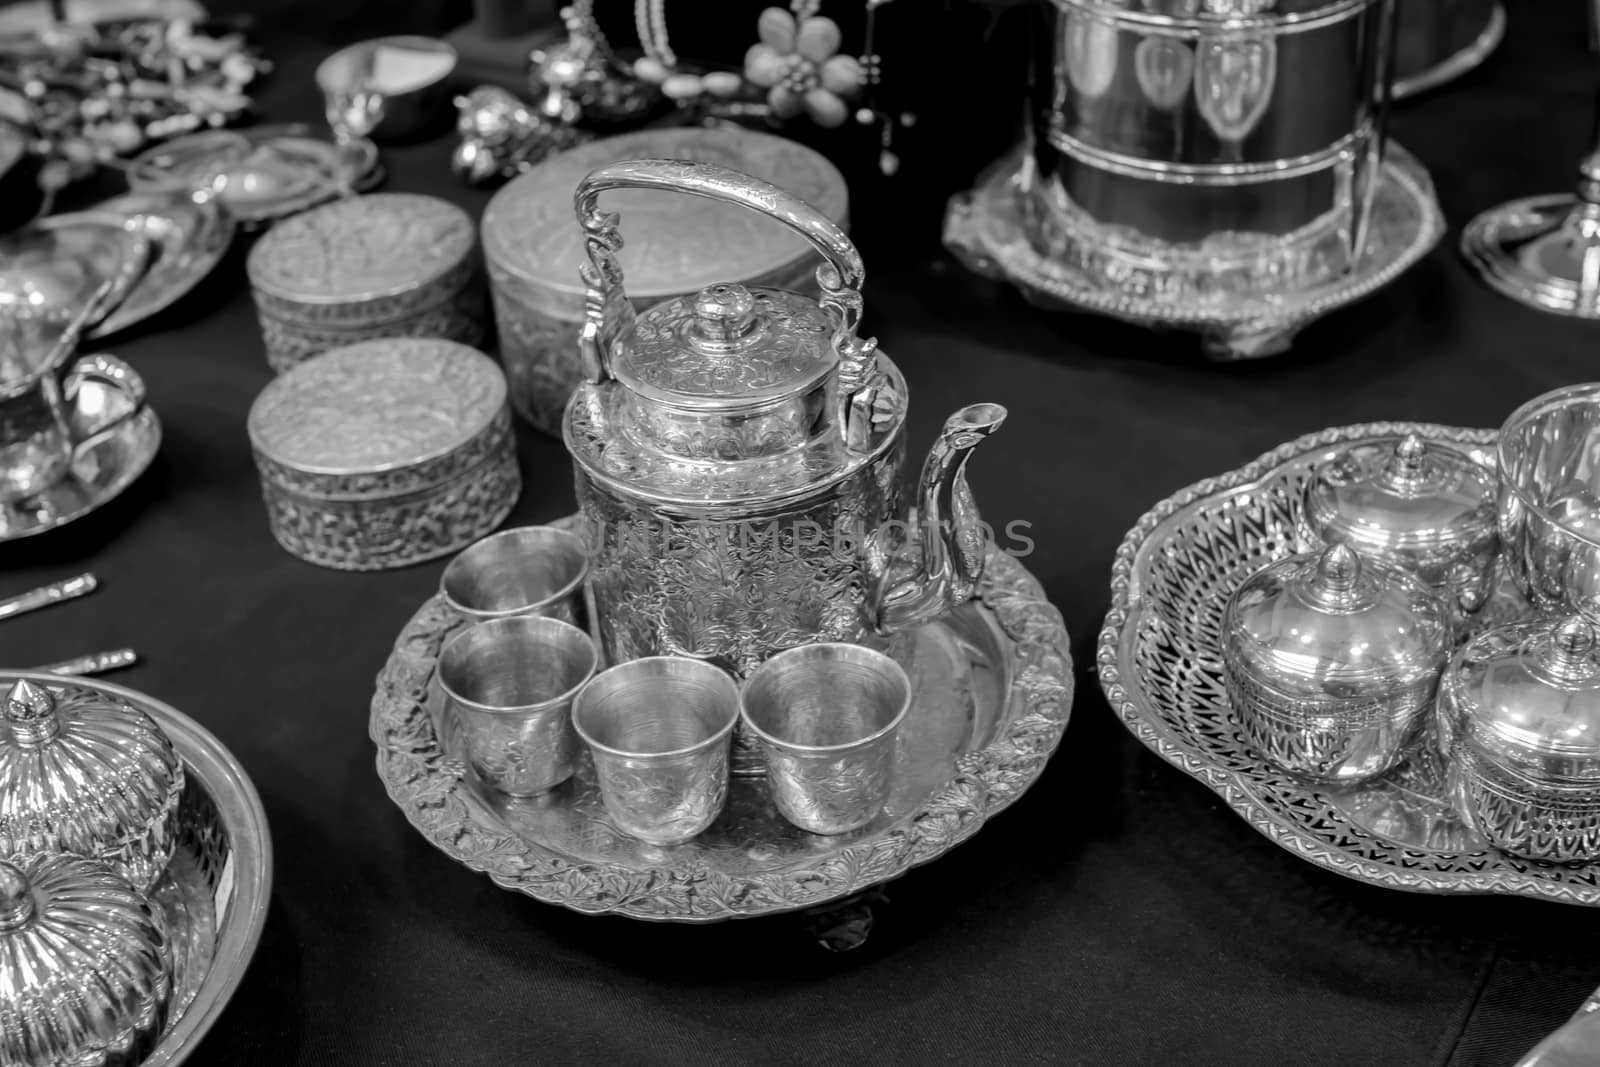 silverware black and white